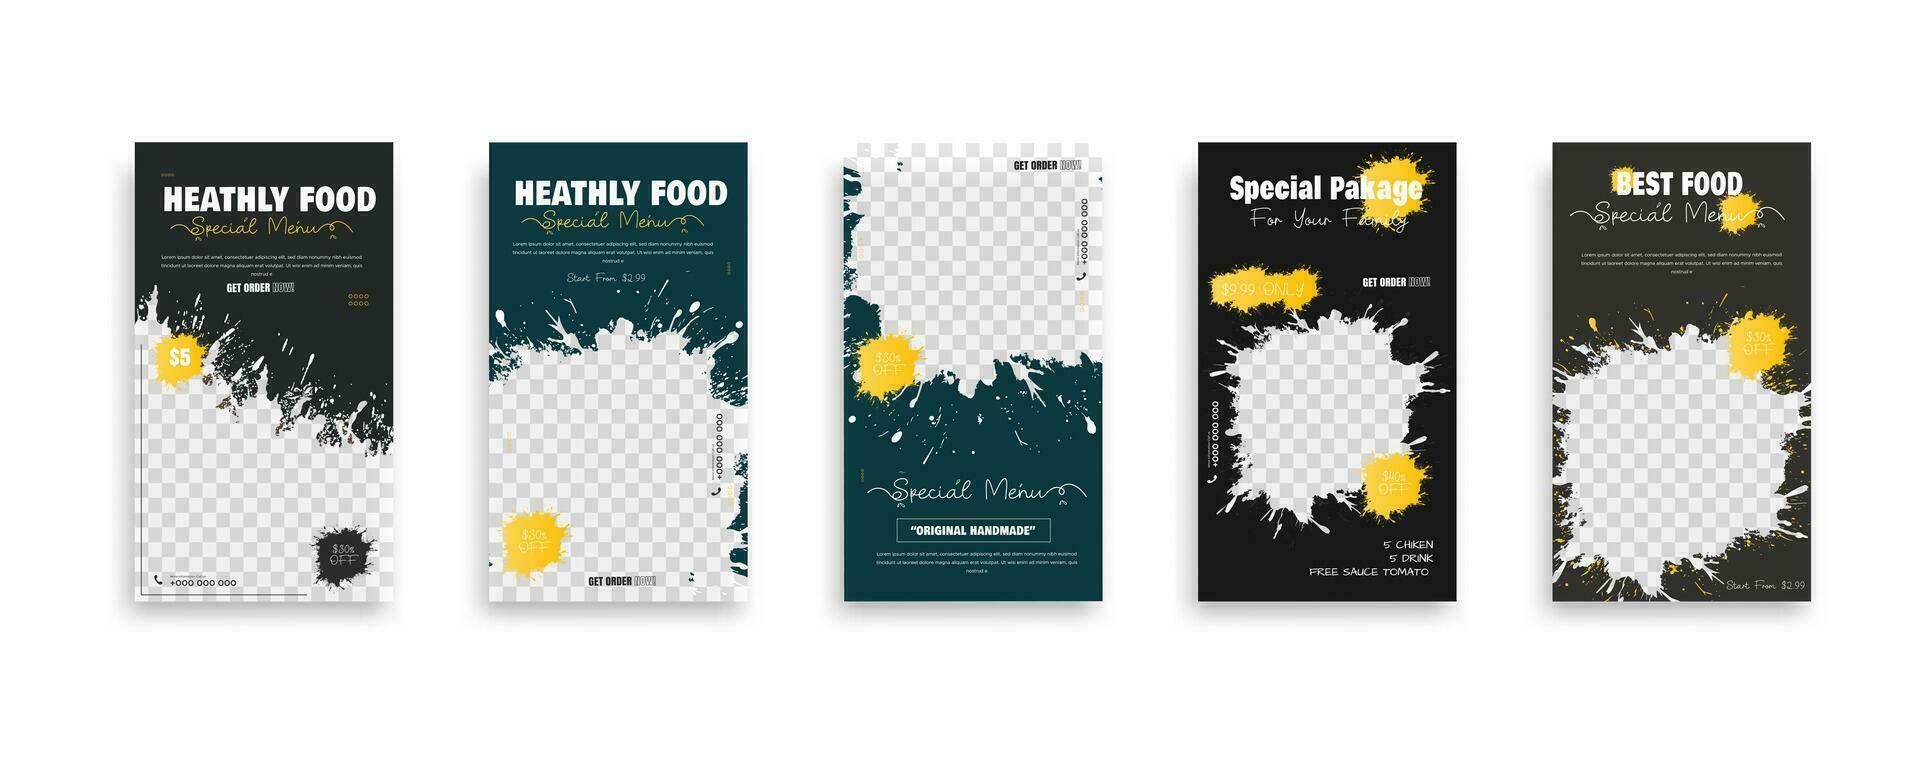 reeks van voedsel post verhaal sociaal media banier sjabloon ontwerp. vector